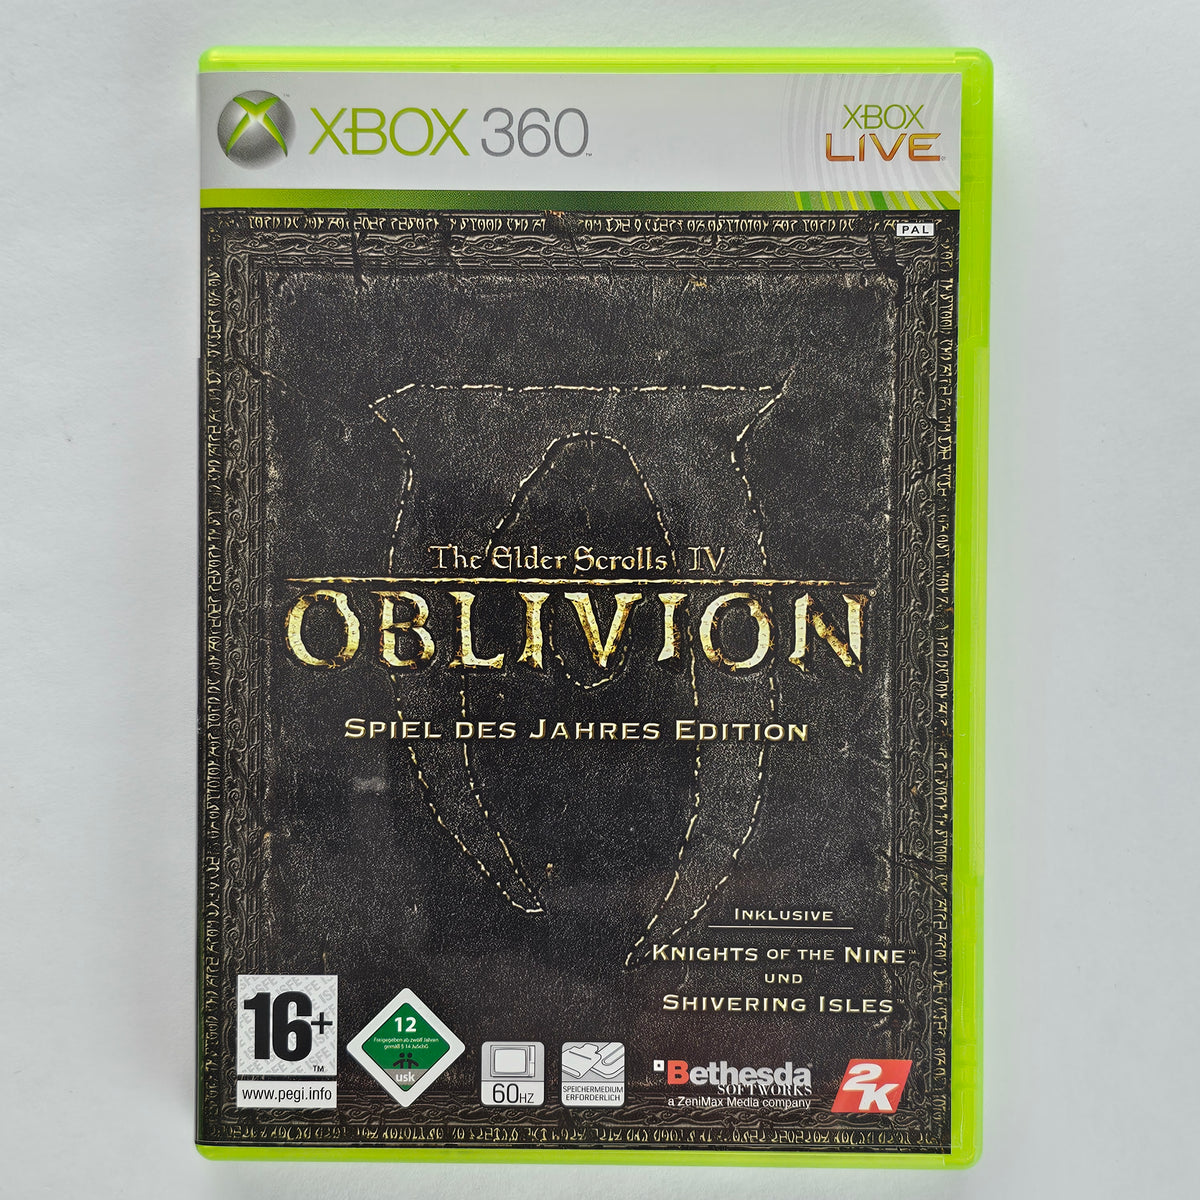 The Elder Scrolls IV Oblivion [XBOX360]